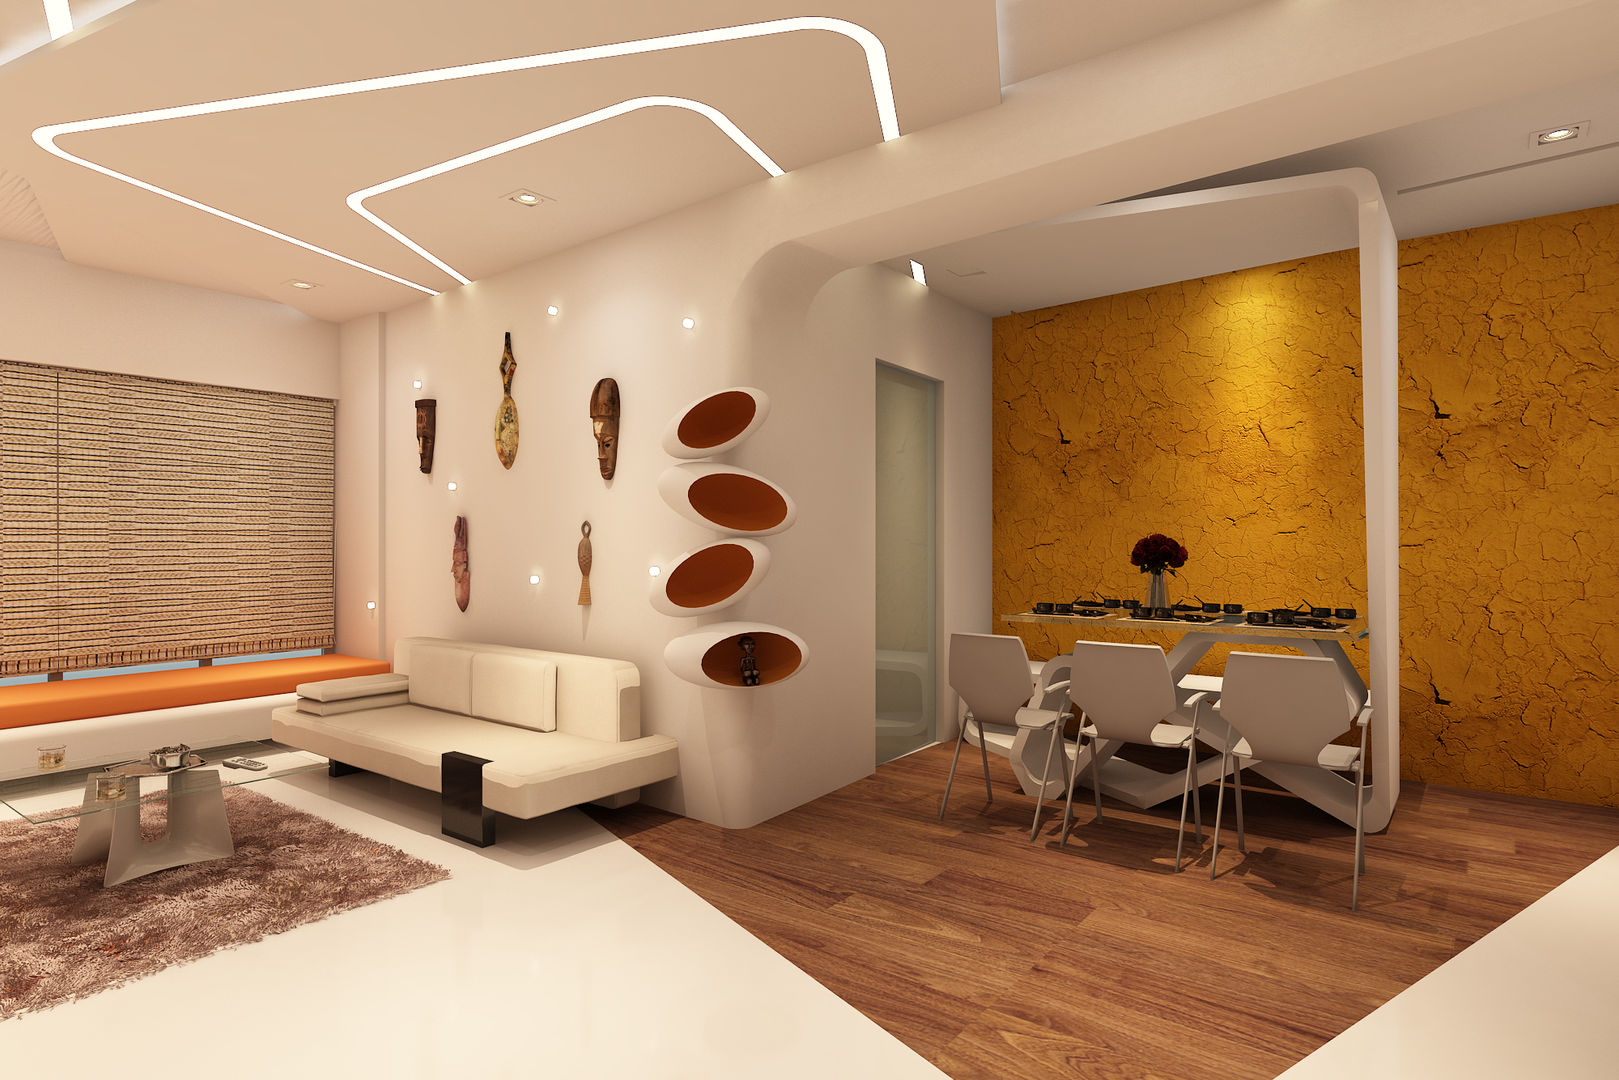 MR. ANCHAL'S RESIDENCE, NEX LVL DESIGNS PVT. LTD. NEX LVL DESIGNS PVT. LTD. Living room design ideas Lighting